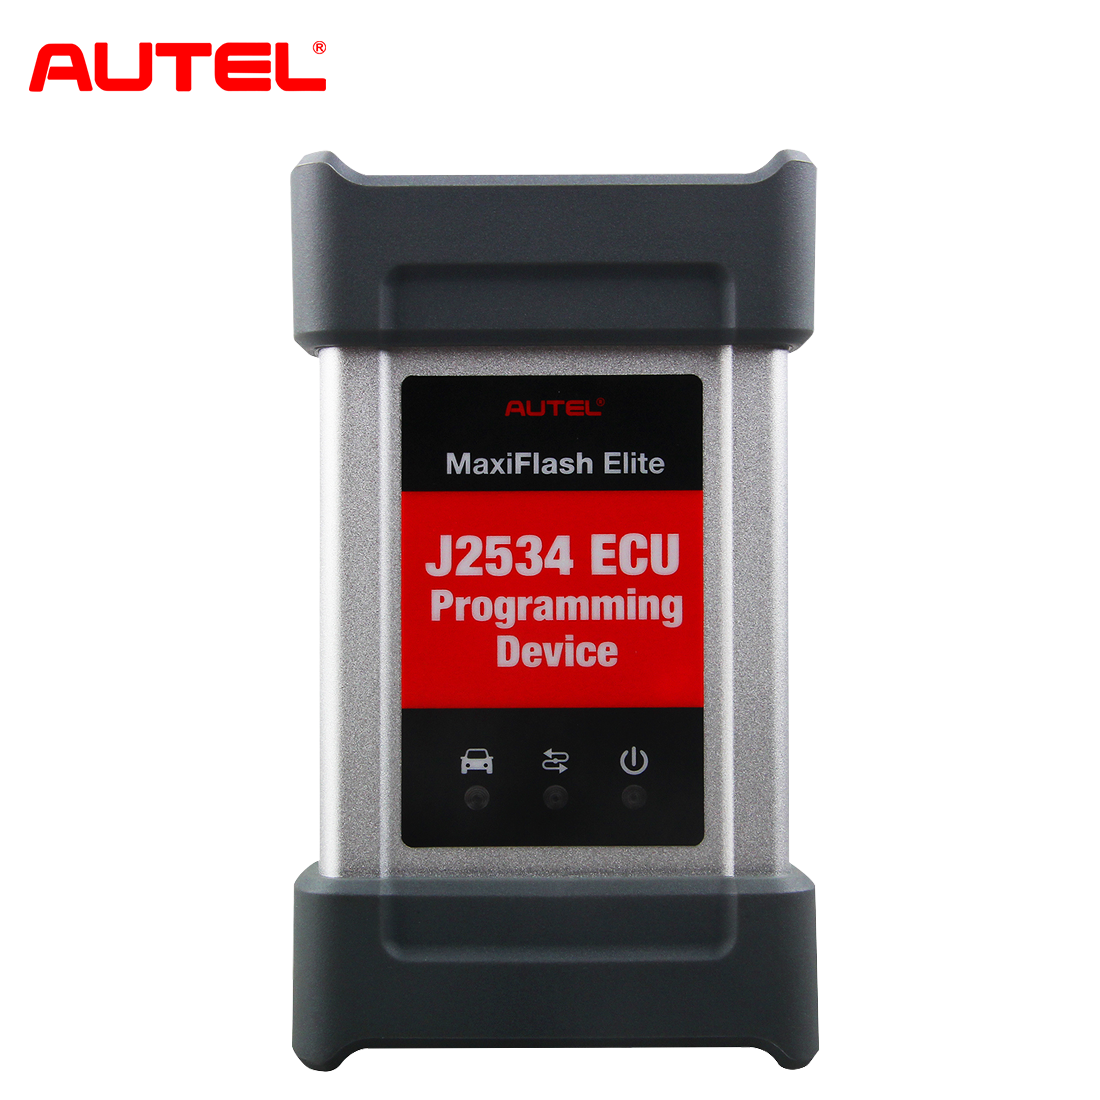 the product of Autel Maxiflash Elite J2534 ECU programming tool